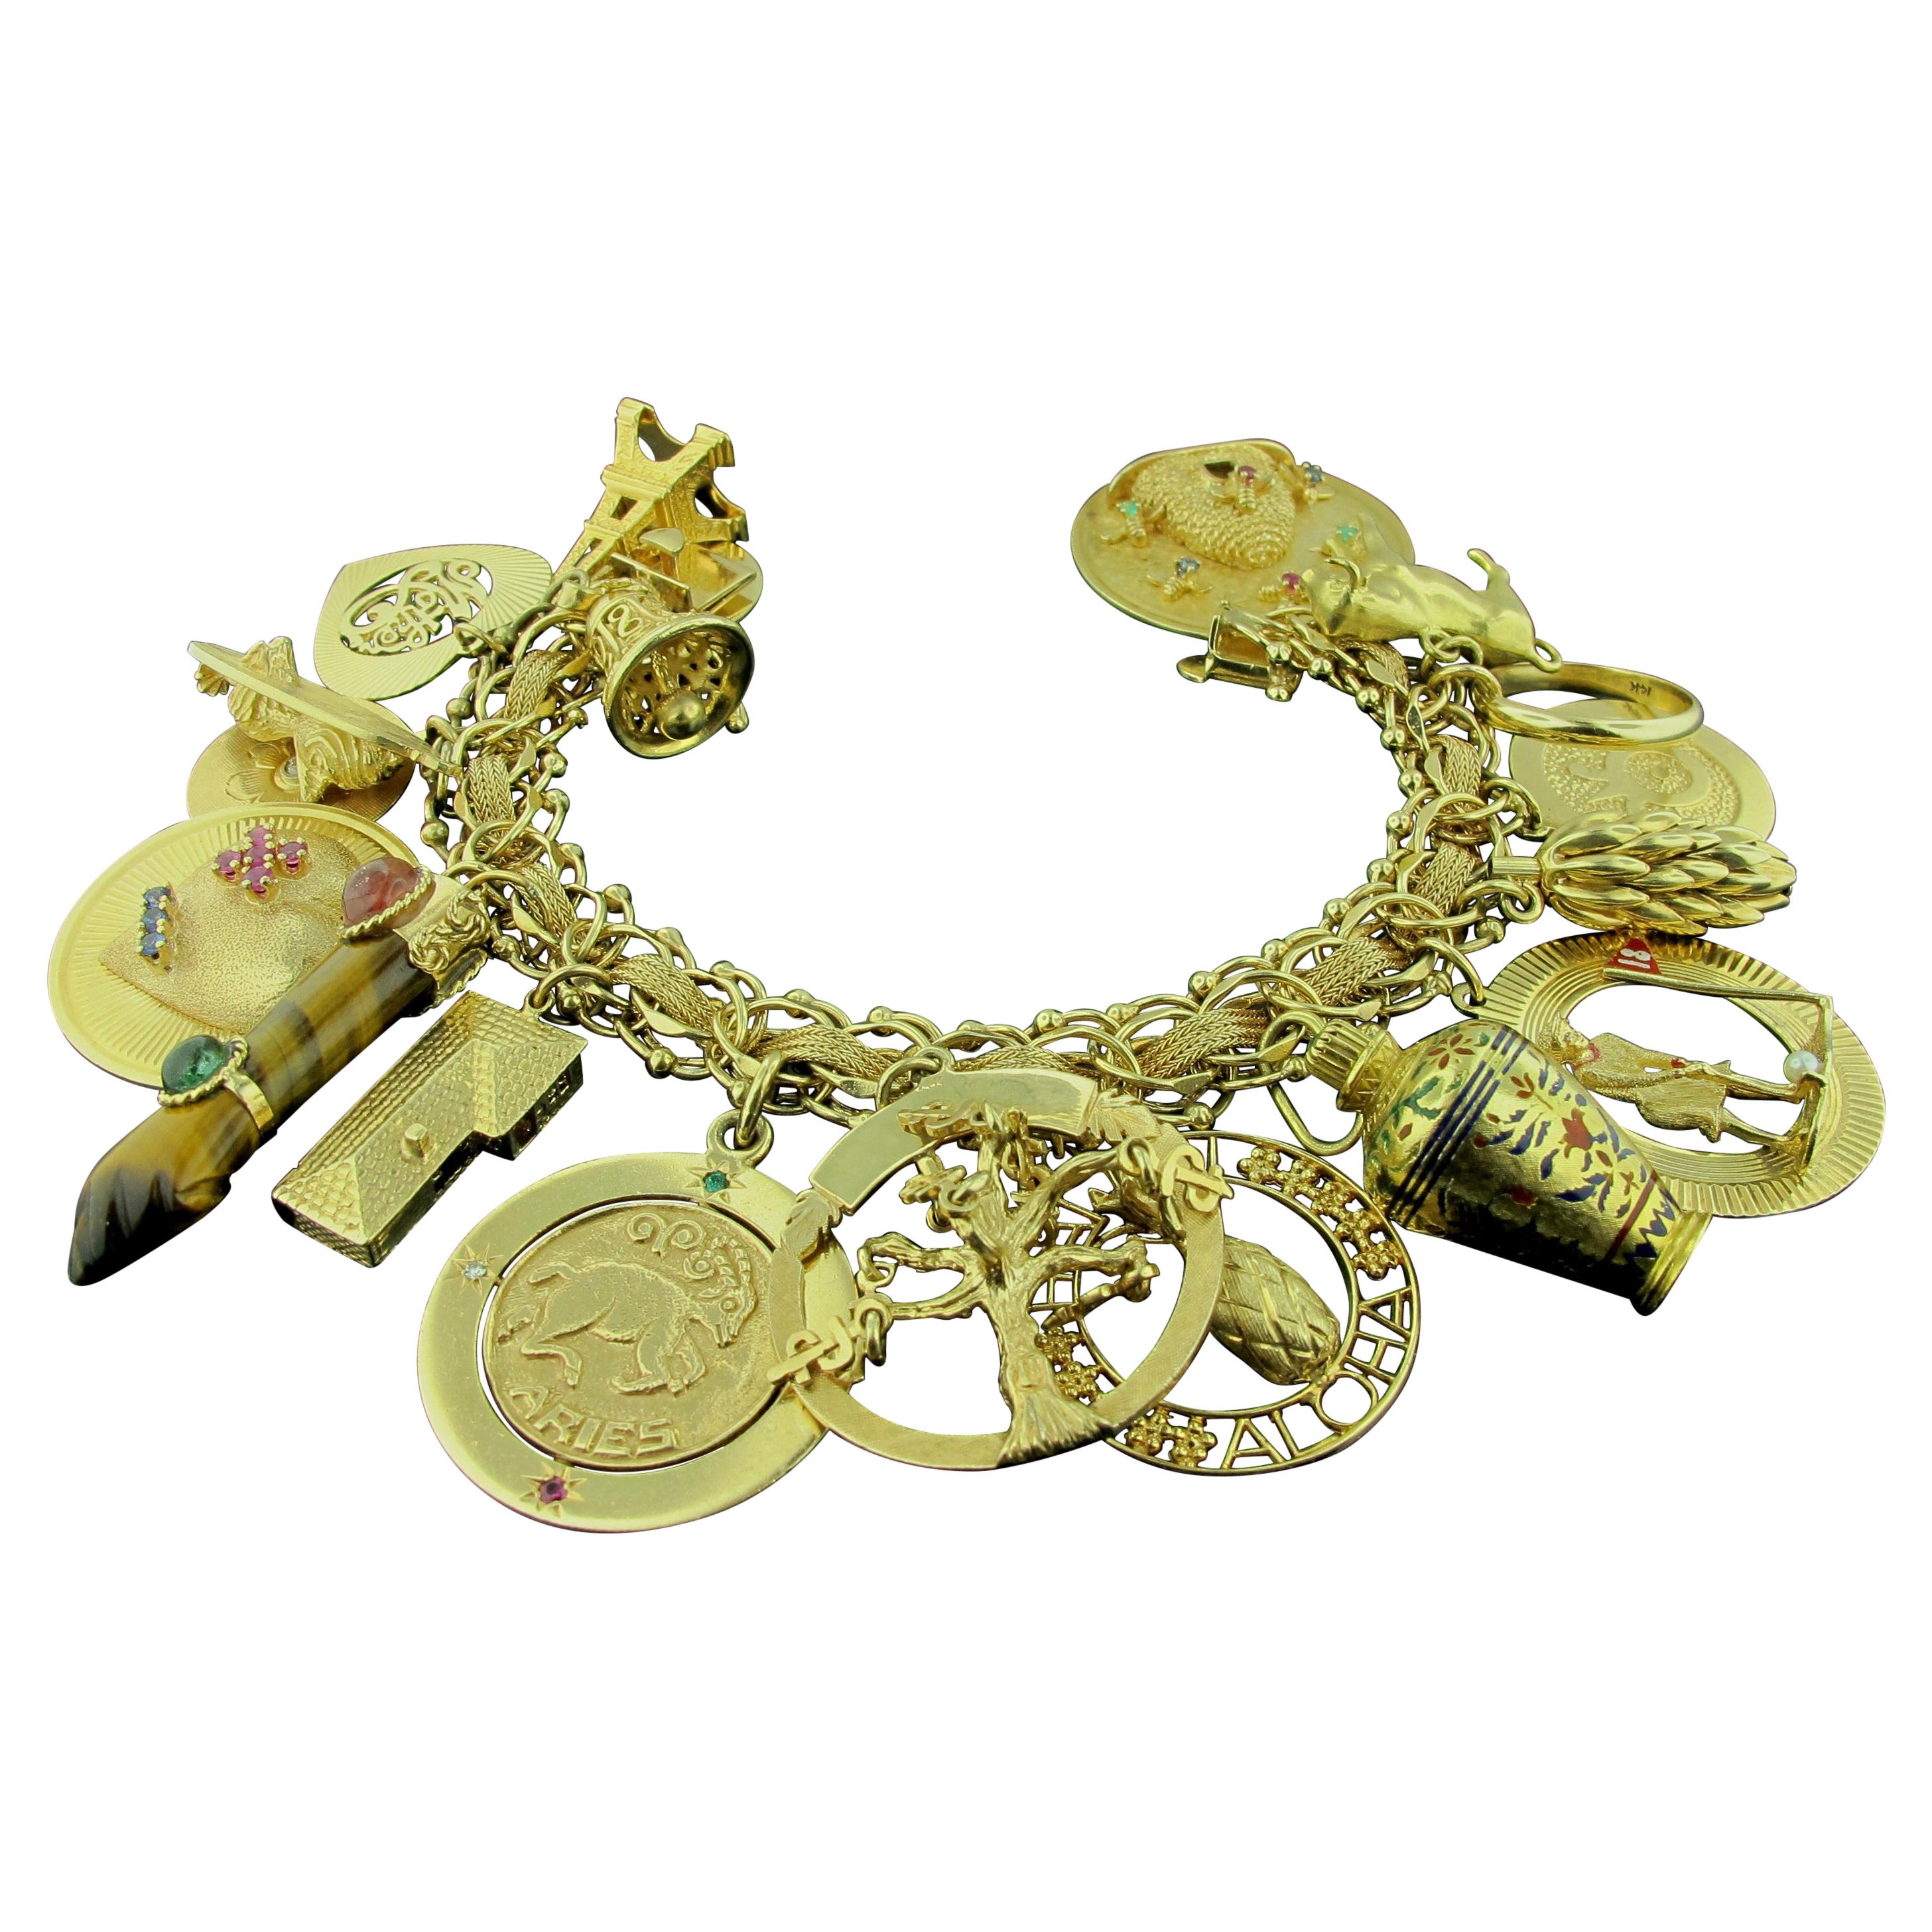 14 Karat Yellow Gold Charm Bracelet with 19 Charms